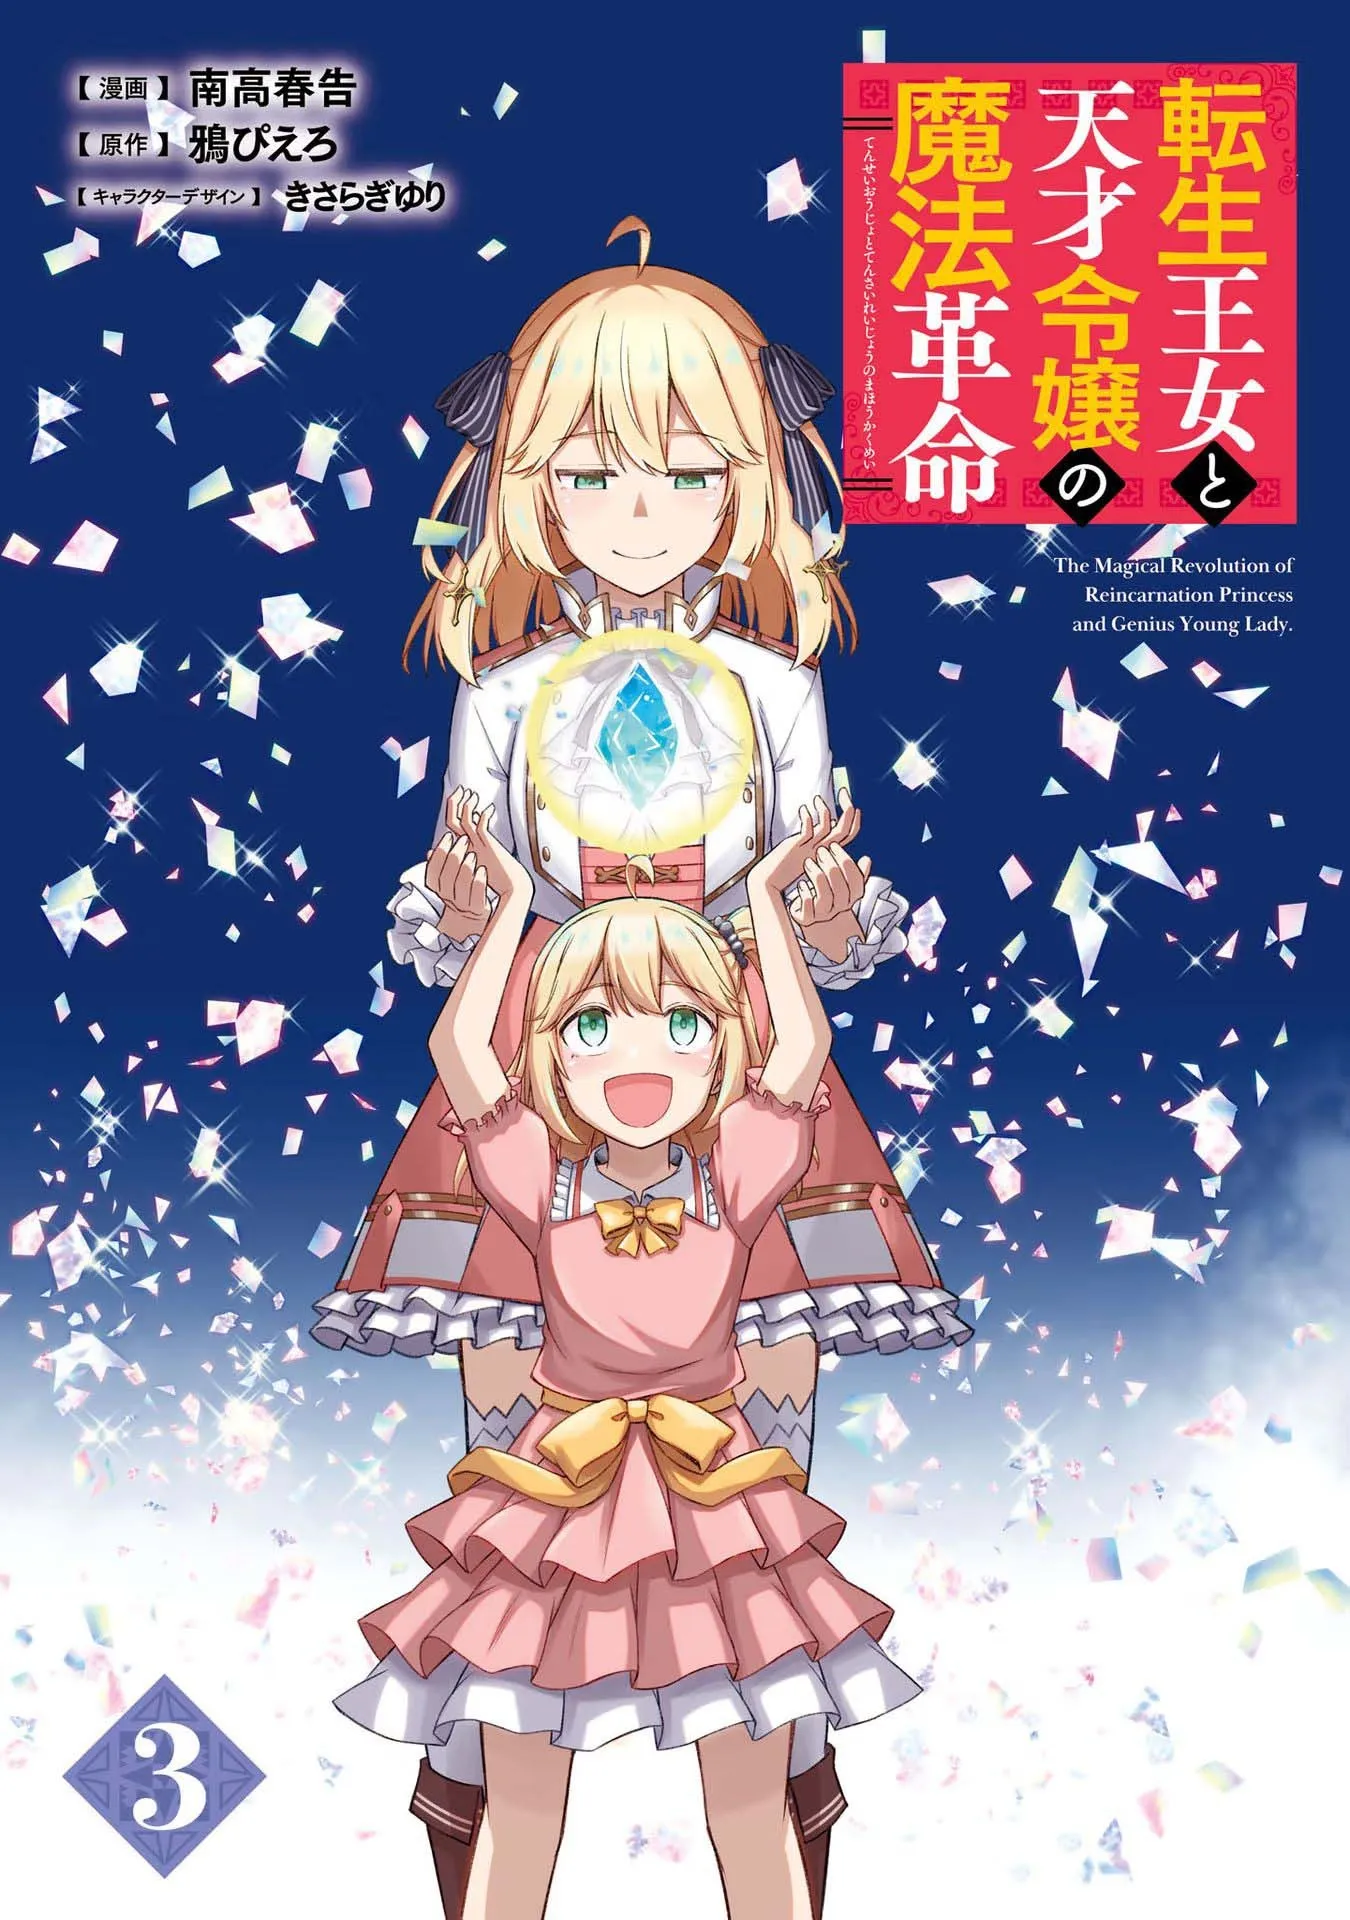 Tensei Ōjo to Tensai Reijō no Mahō Kakumei – Novo teaser trailer do anime  yuri - Manga Livre RS